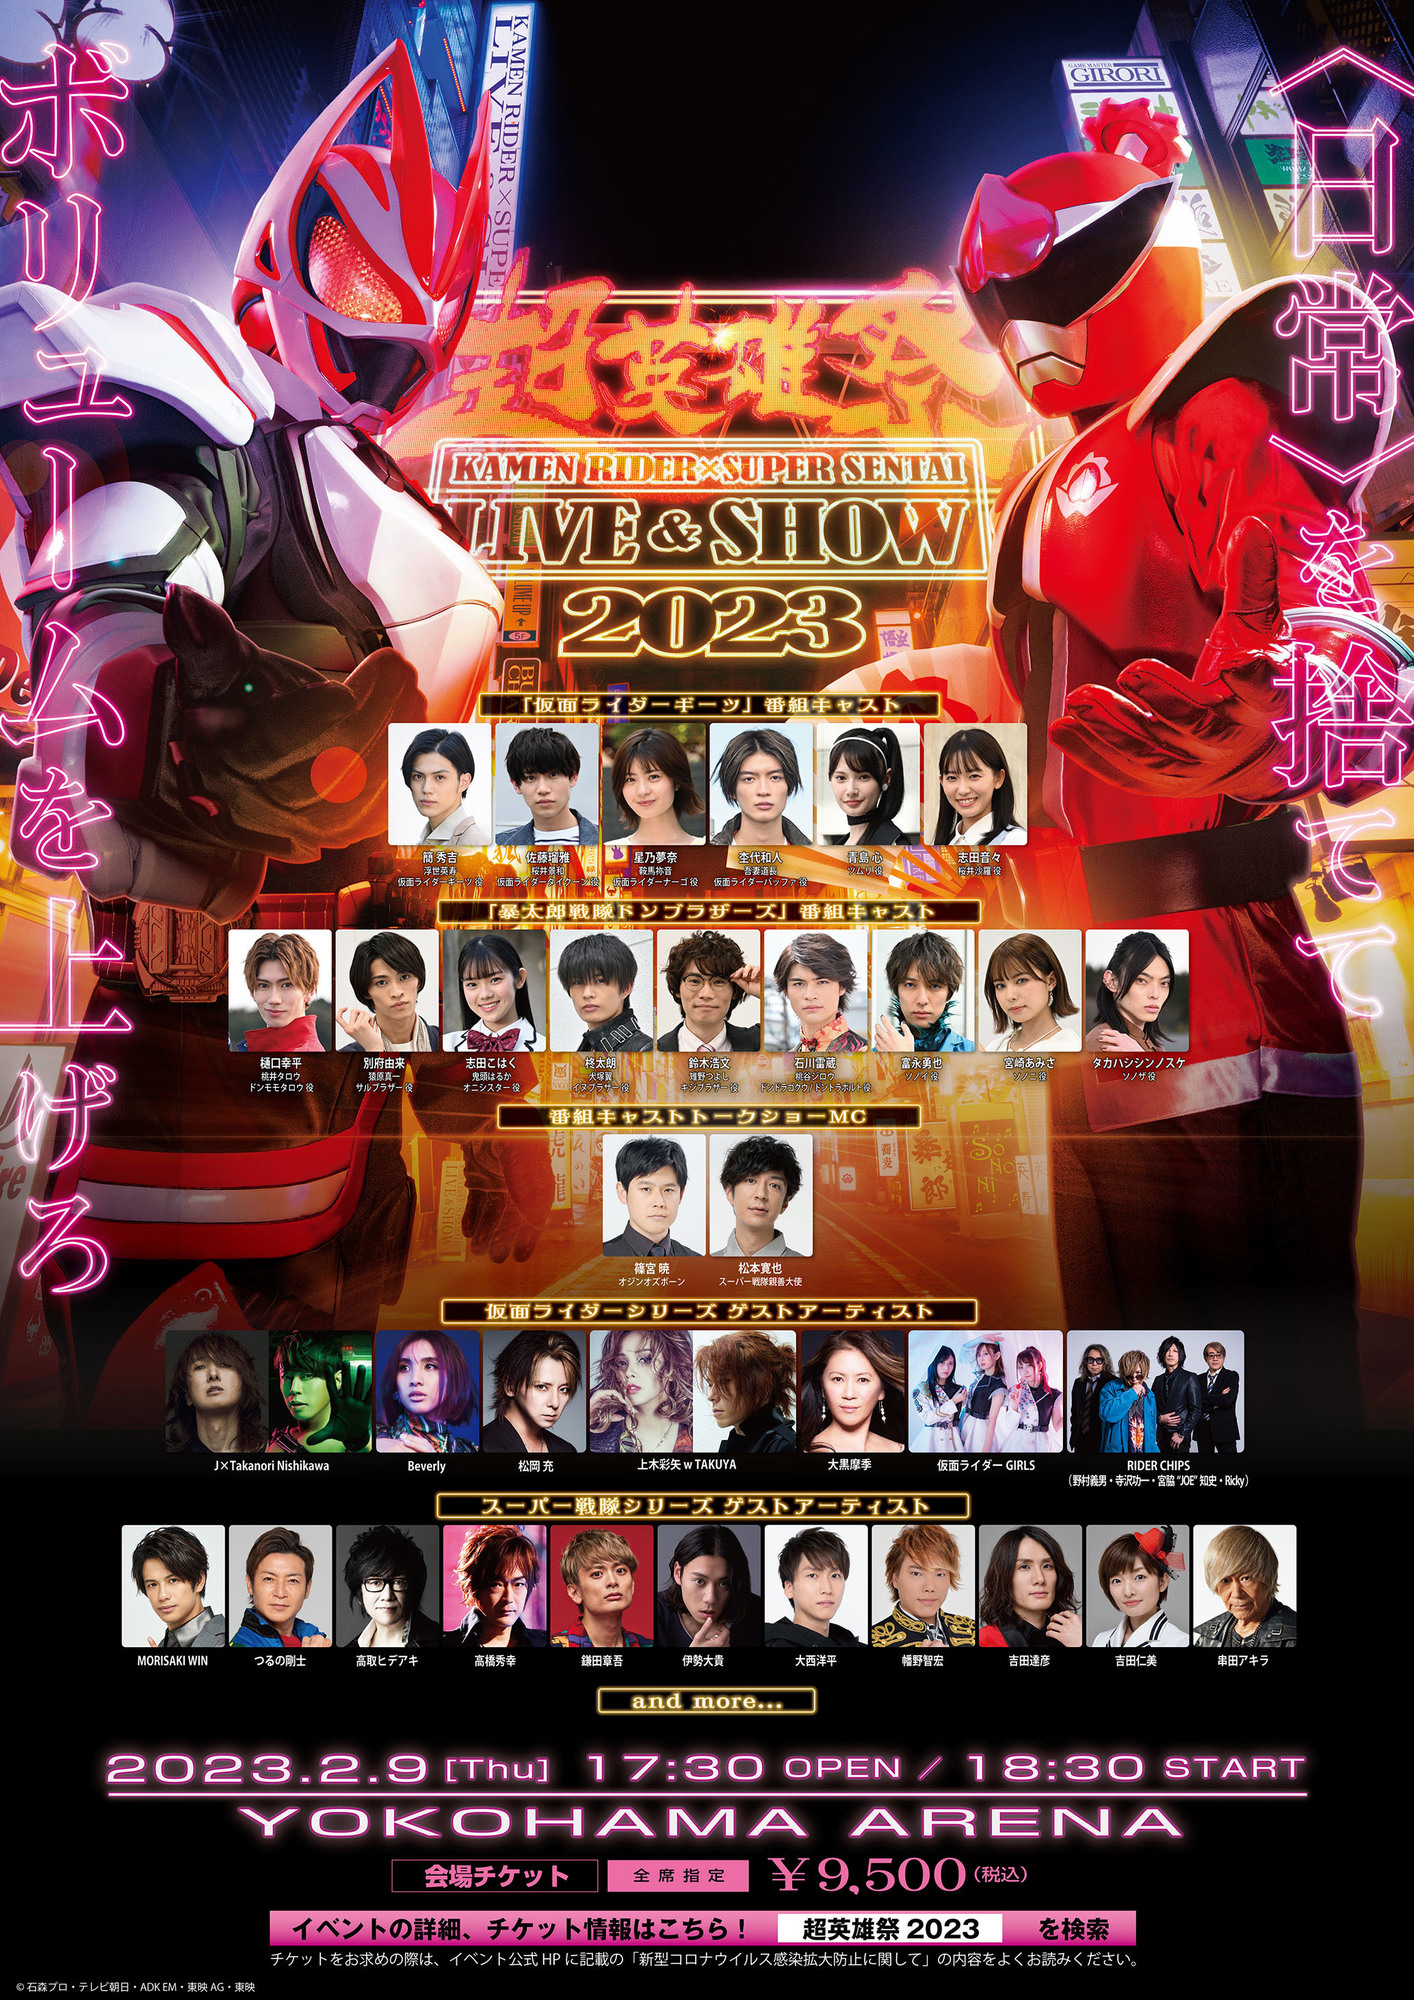 EVENT】「超英雄祭 KAMEN RIDER × SUPER SENTAI LIVE & SHOW 2023 